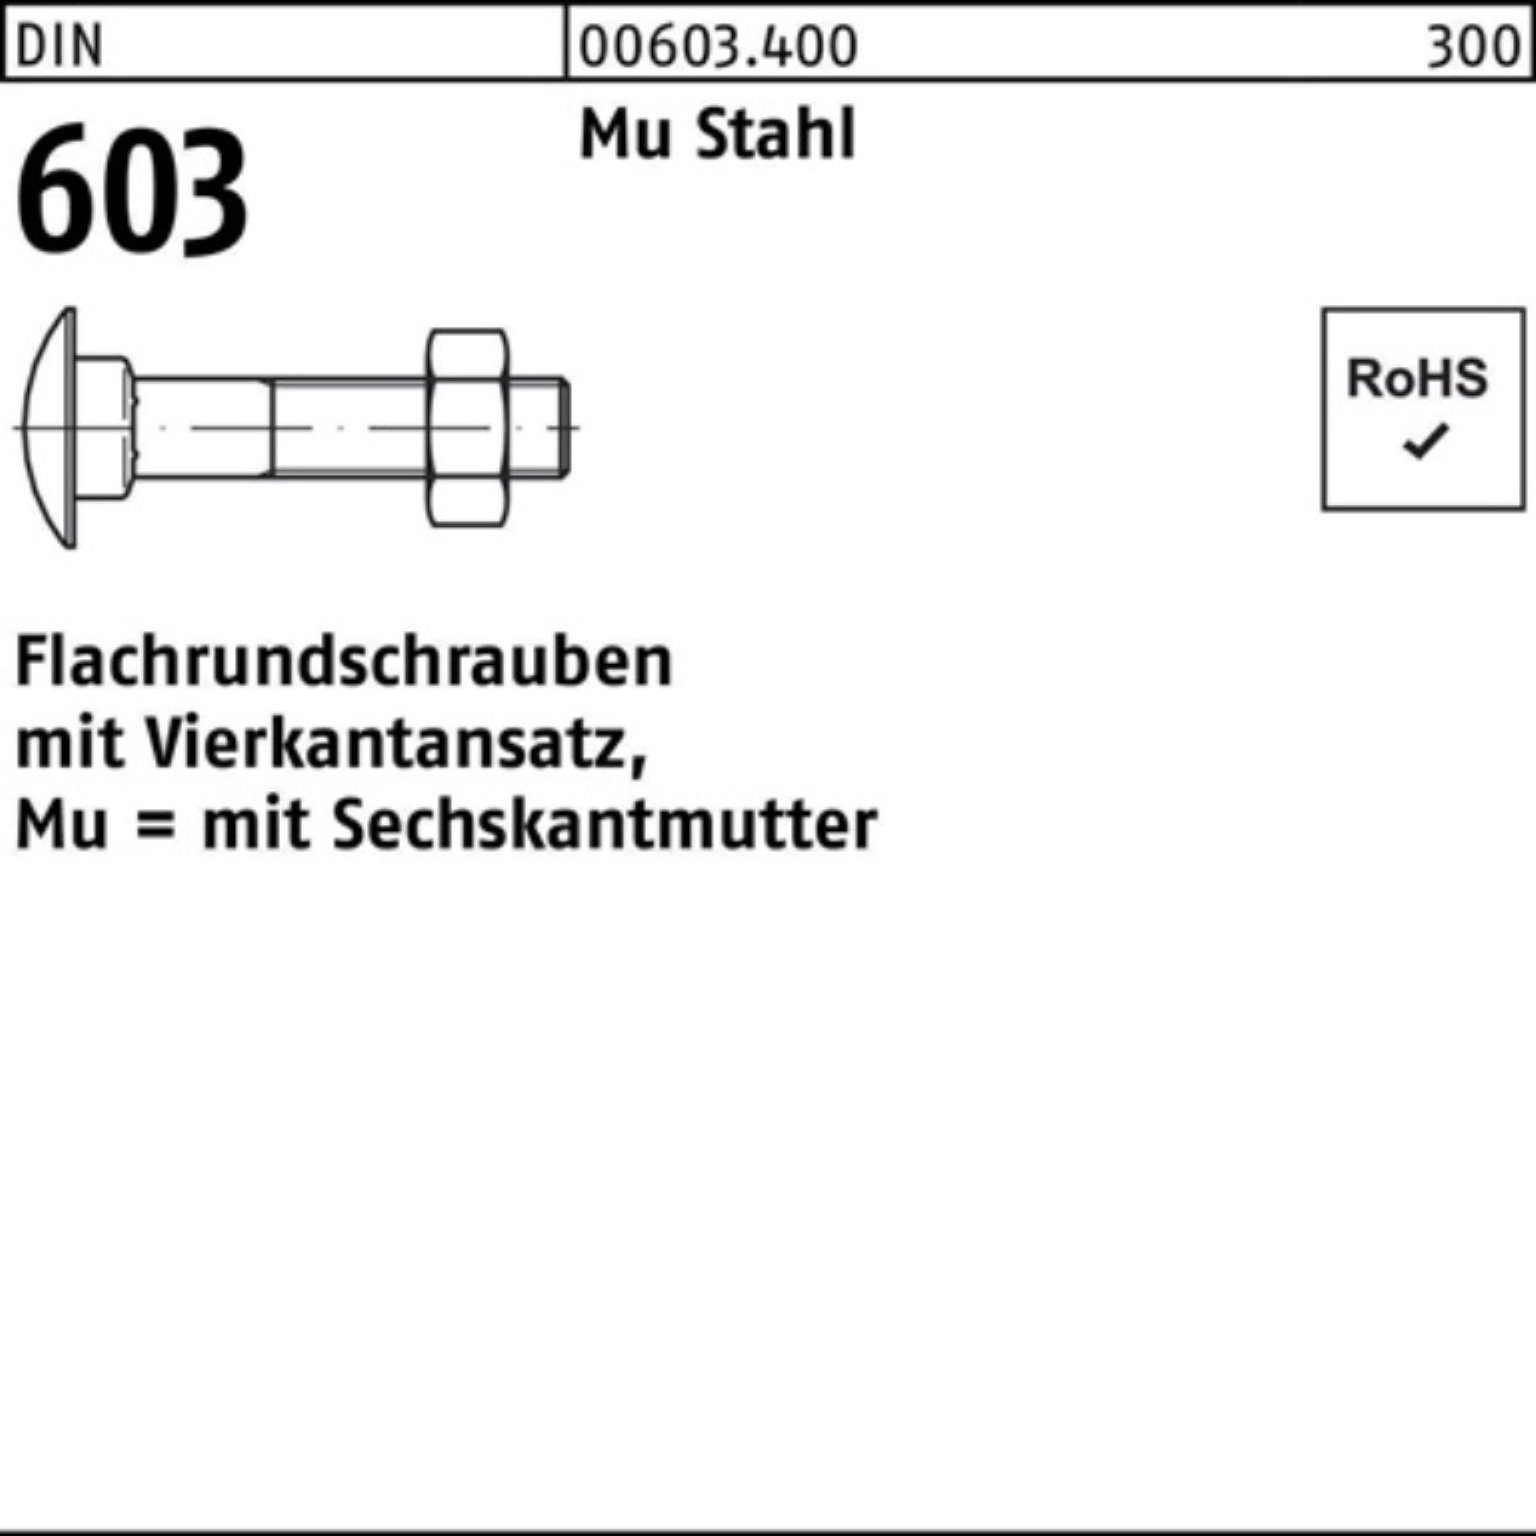 M Vierkantansatz/6-ktmutter Flachrundschraube 603 M8x60 Pack Schraube 200er DIN Reyher